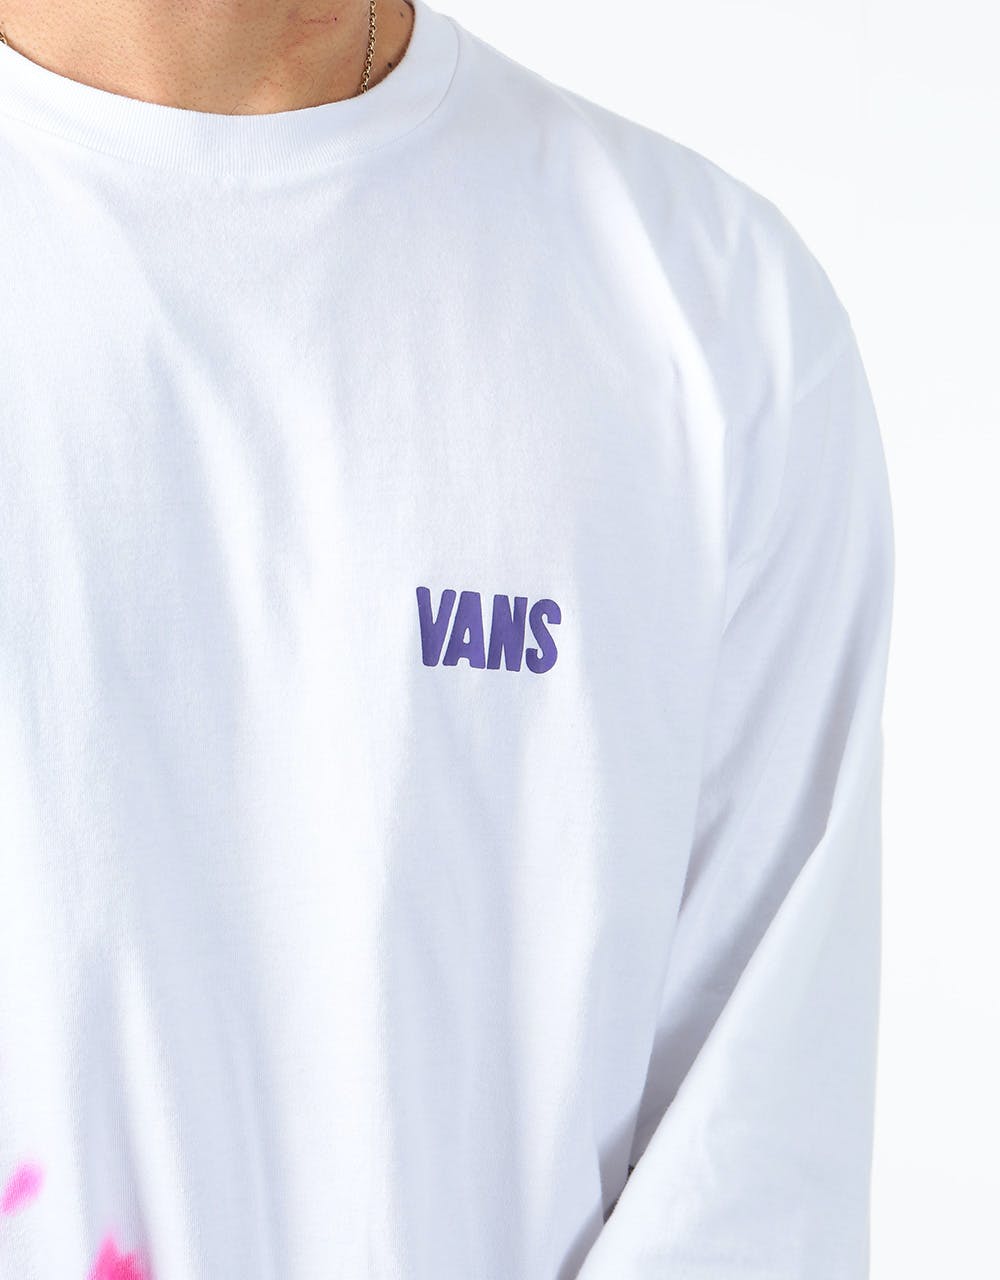 Vans Eyes Open Tie Dye L/S T-Shirt - White